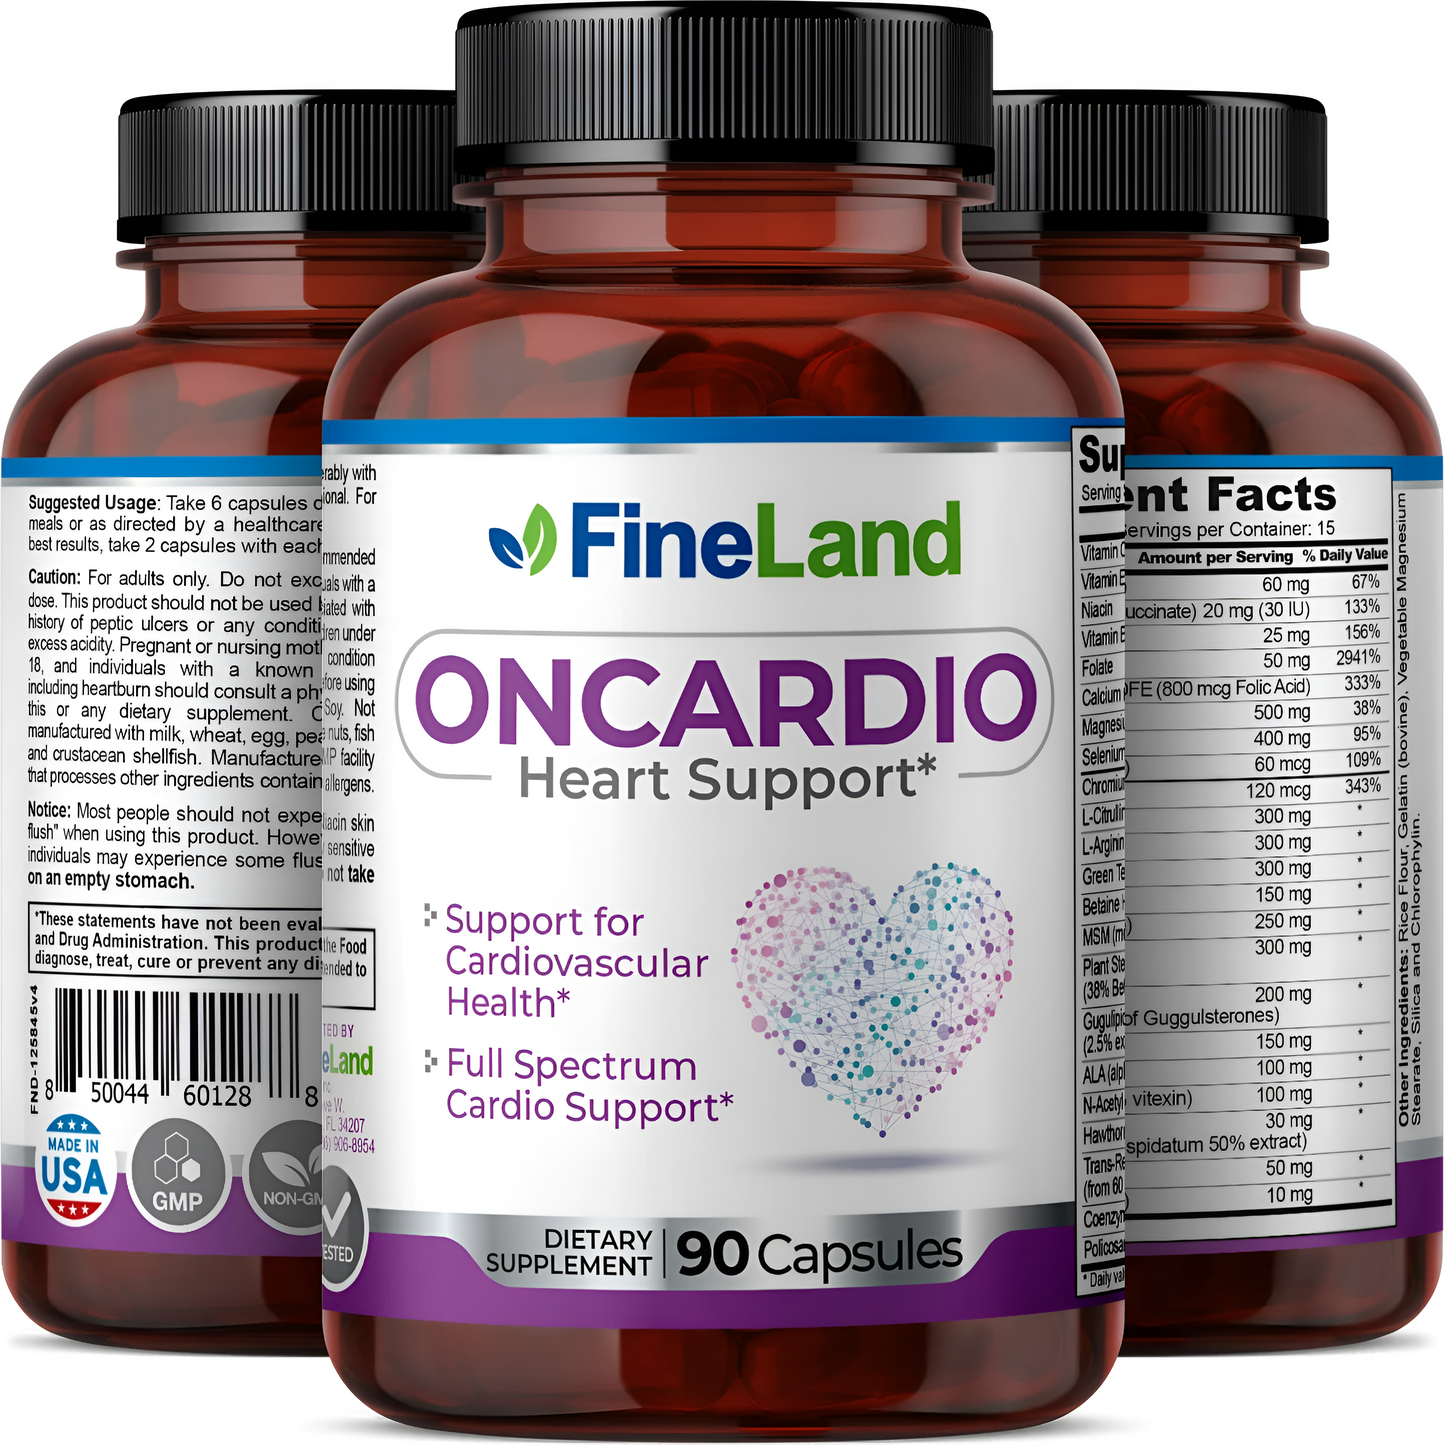 Oncardio heart support - Fineland , 90 capsulas